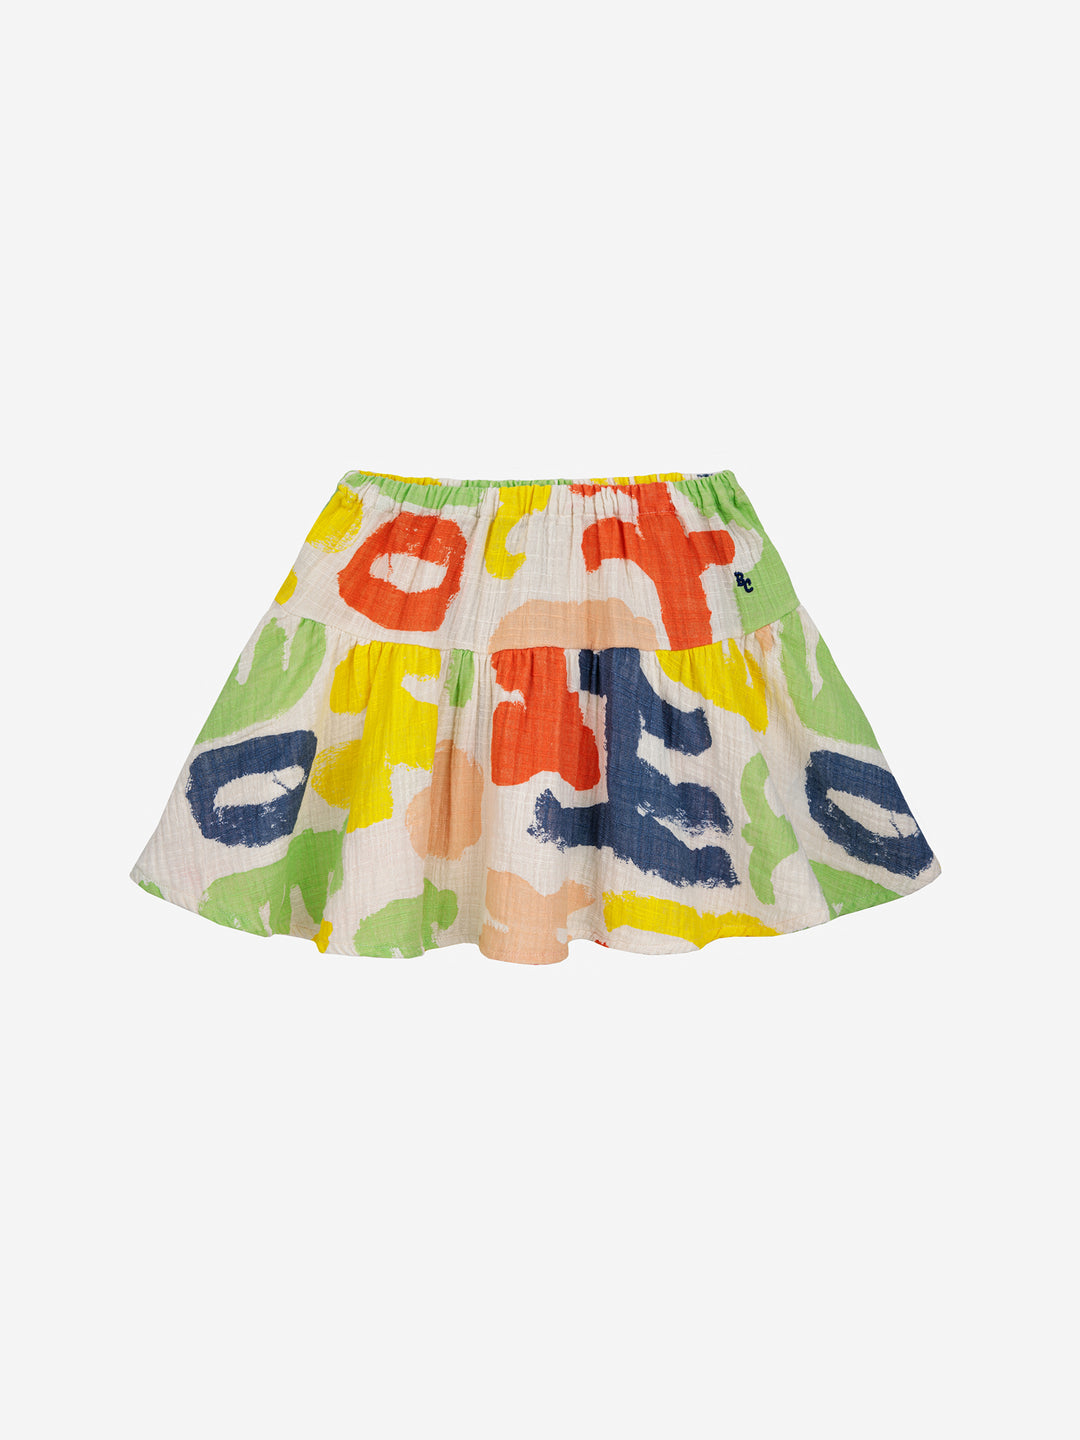 Carnival Woven Skirt by Bobo Choses